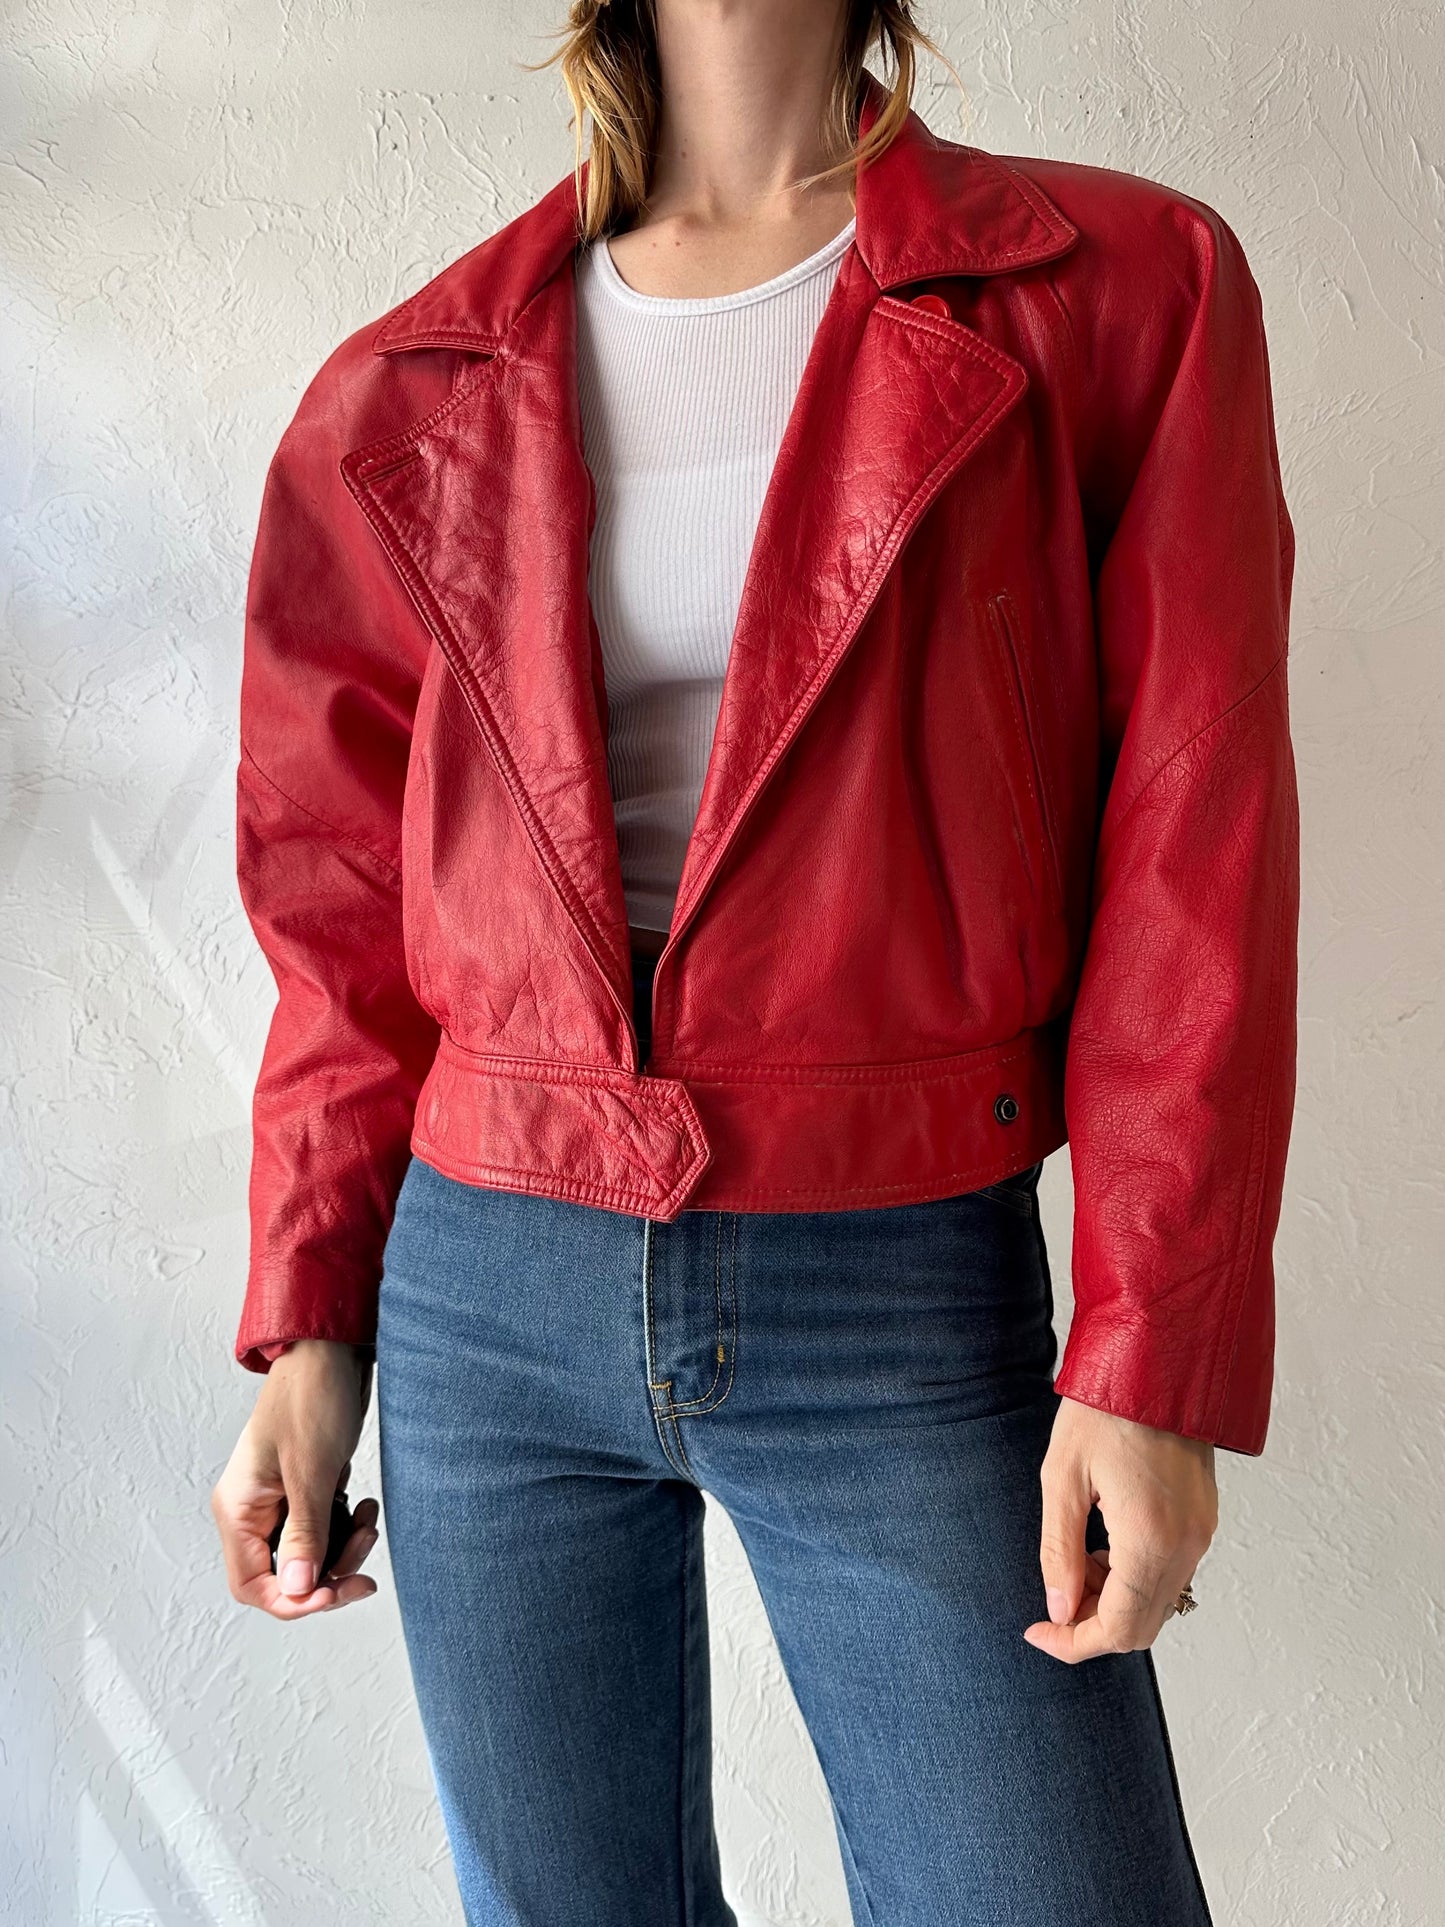 90s 'Wilsons' Red Leather Jacket / Medium